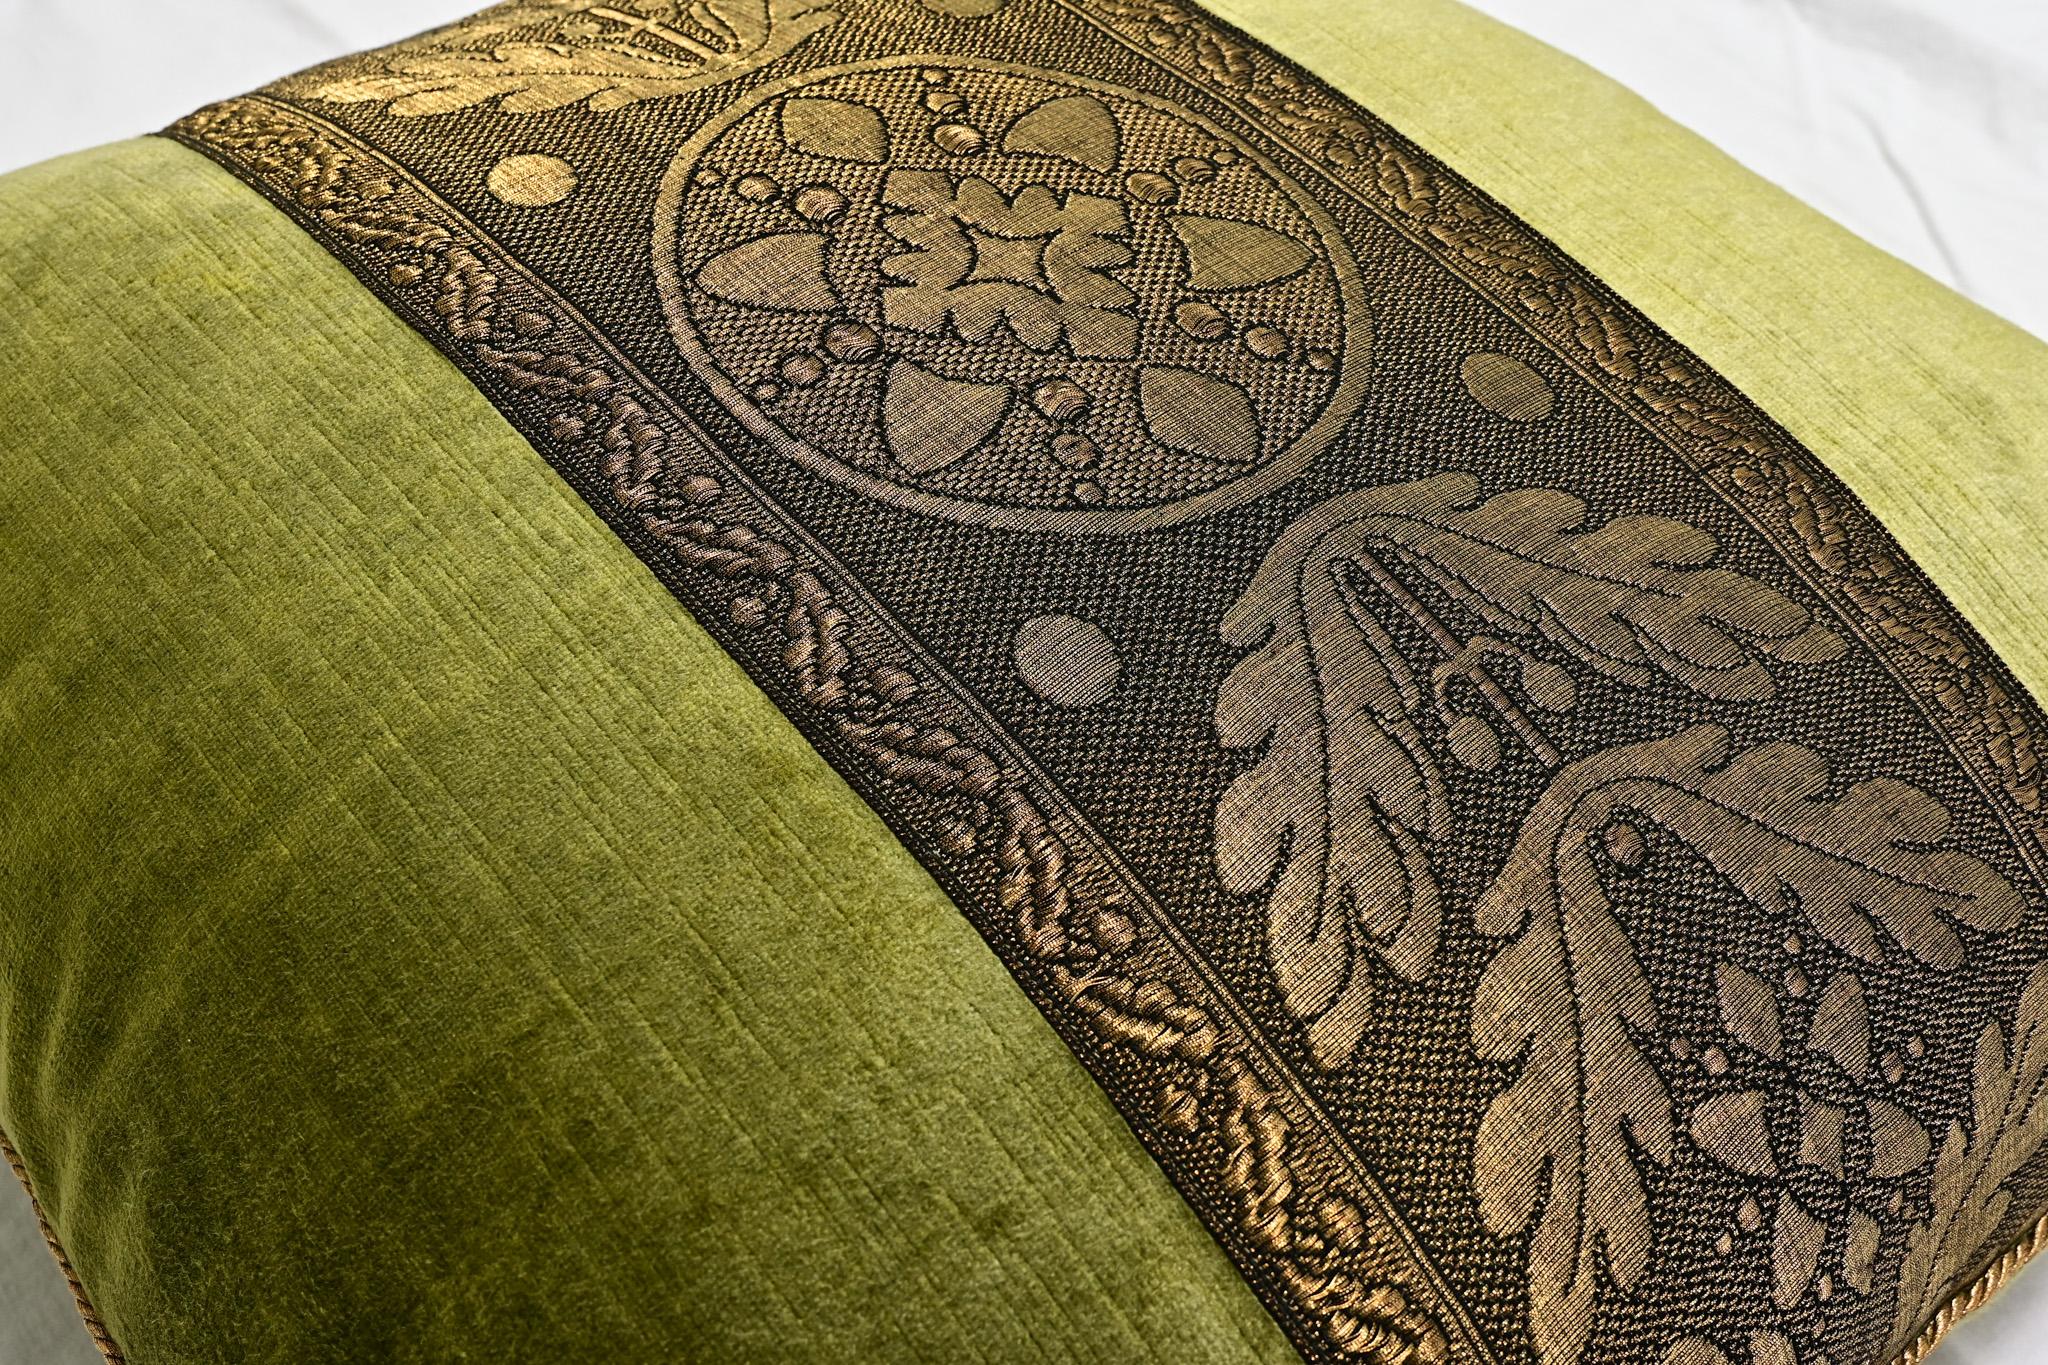 American B. Viz Antique Embroidery Pillow